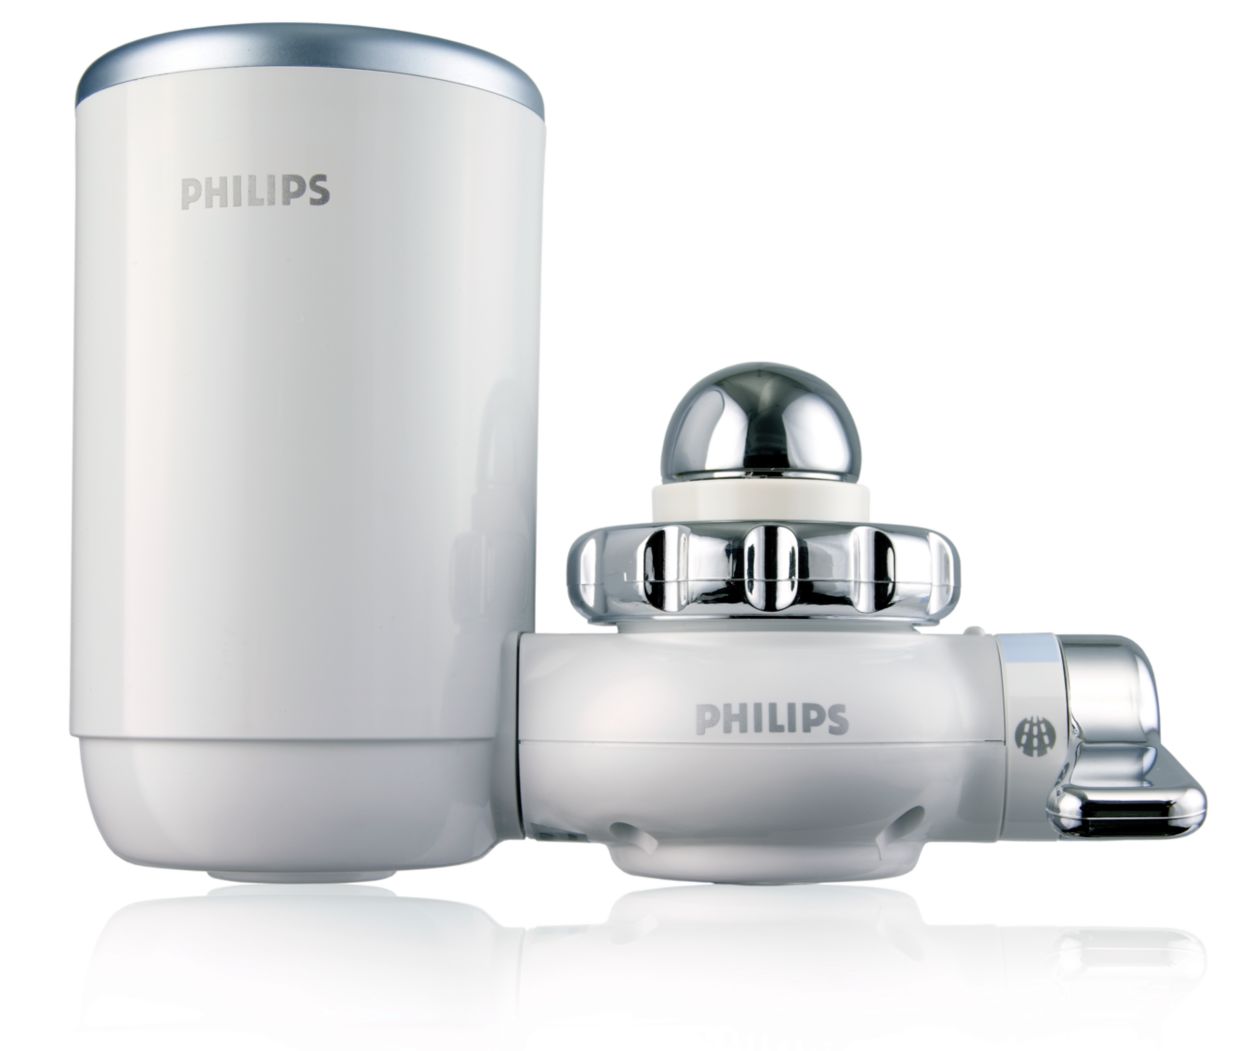 Filtro agua Purificador grifo Philips wp3861